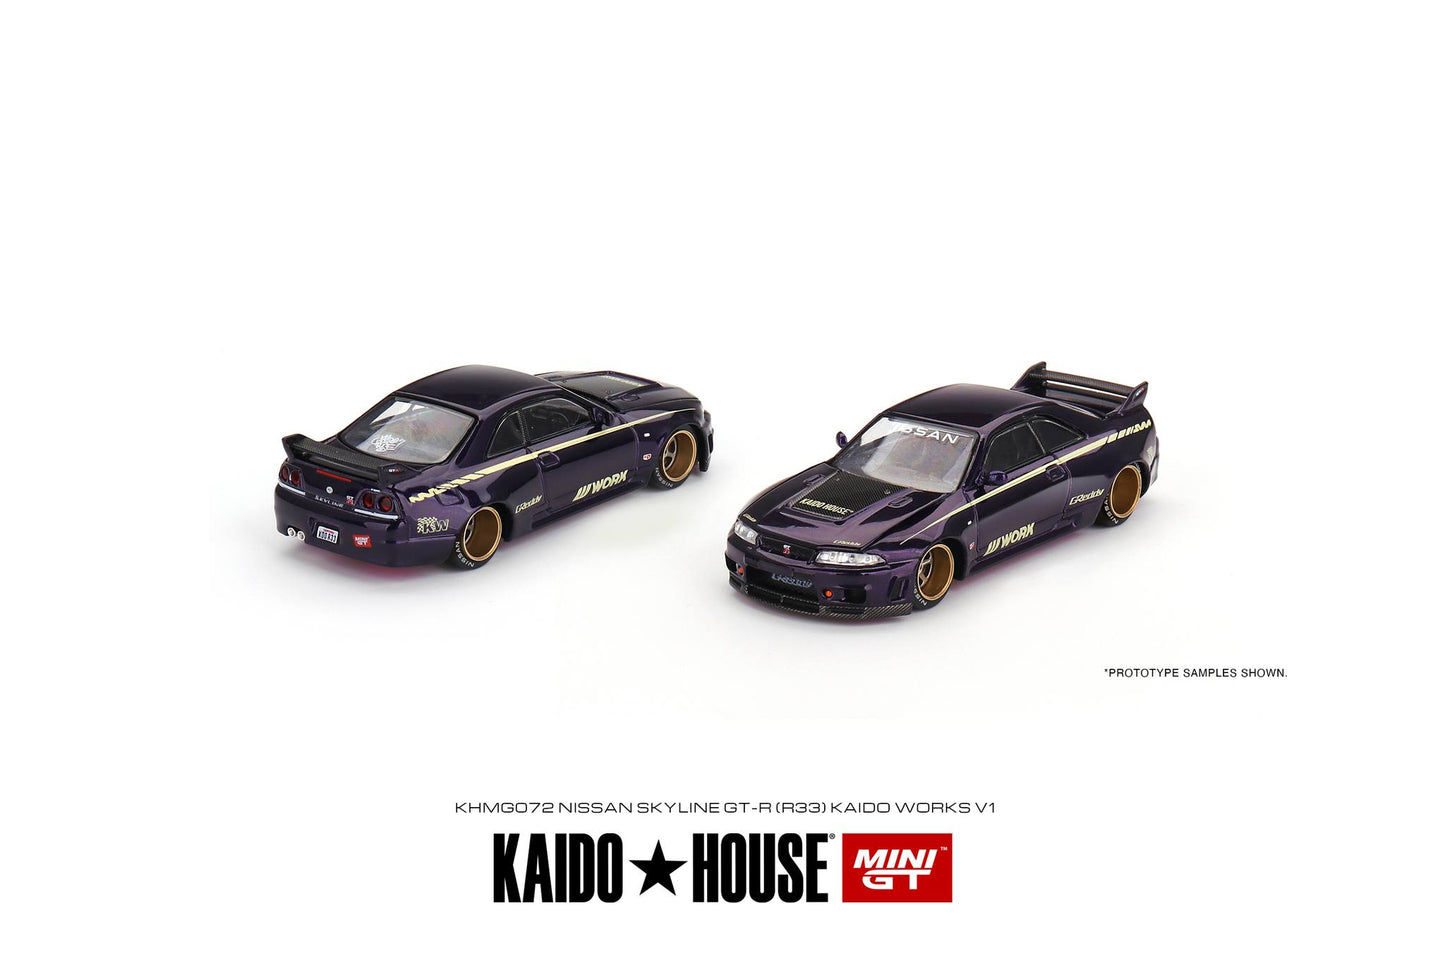 Mini GT x Kaido House Nissan Skyline GT-R (R33) Kaido Works V1